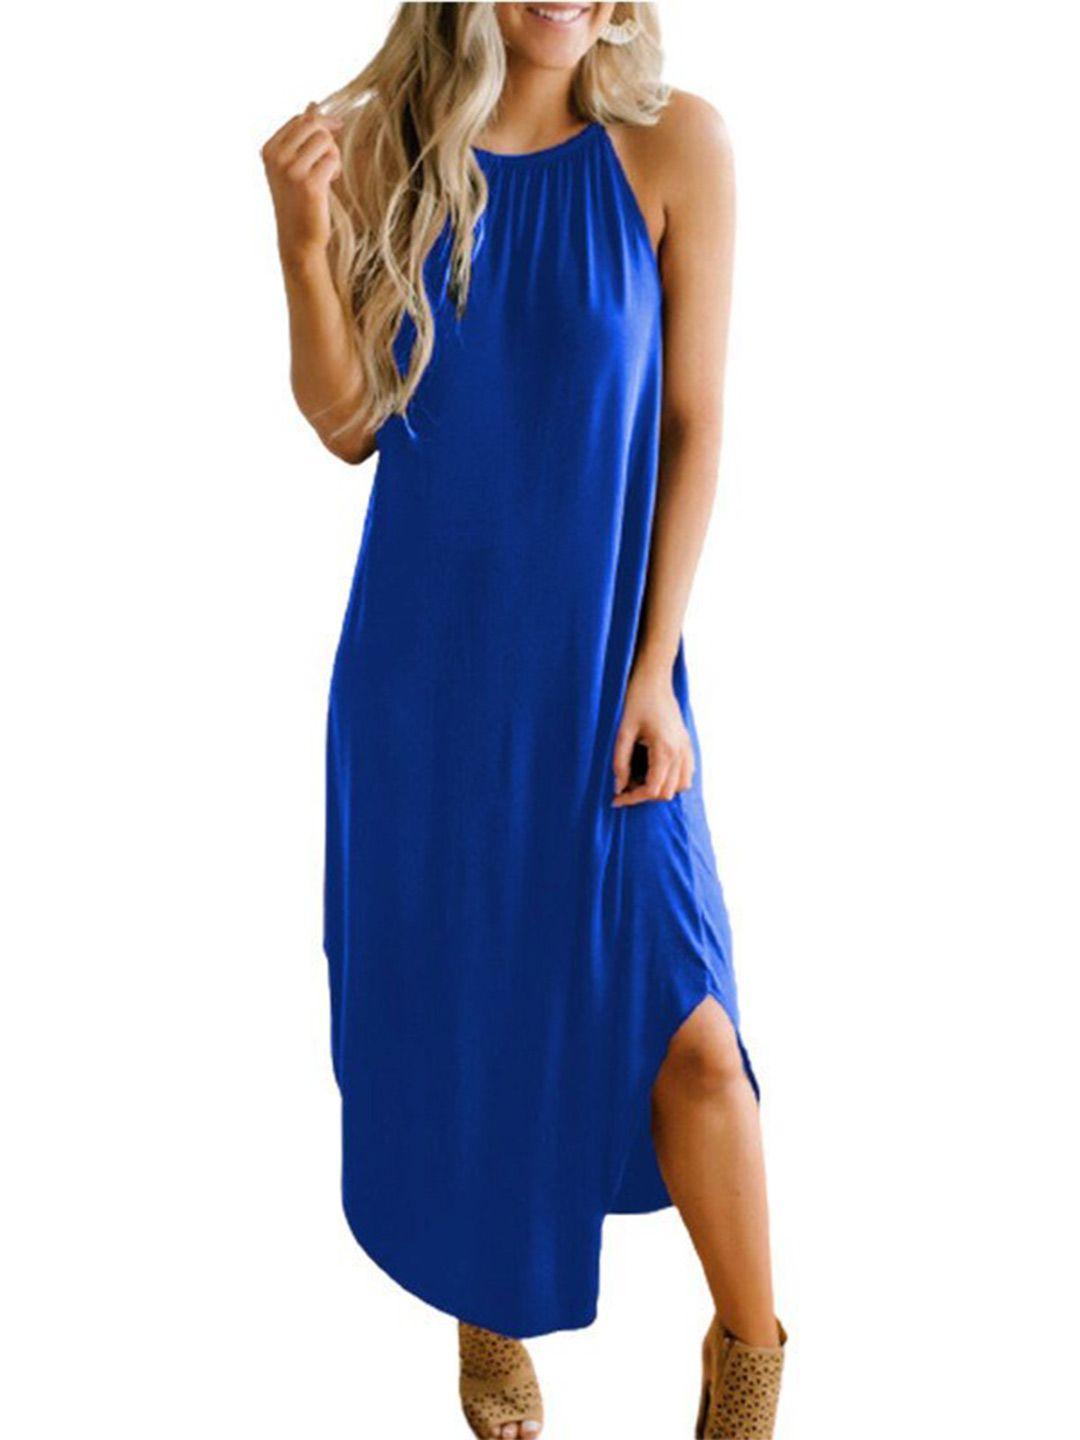 stylecast-blue-halter-neck-maxi-dress